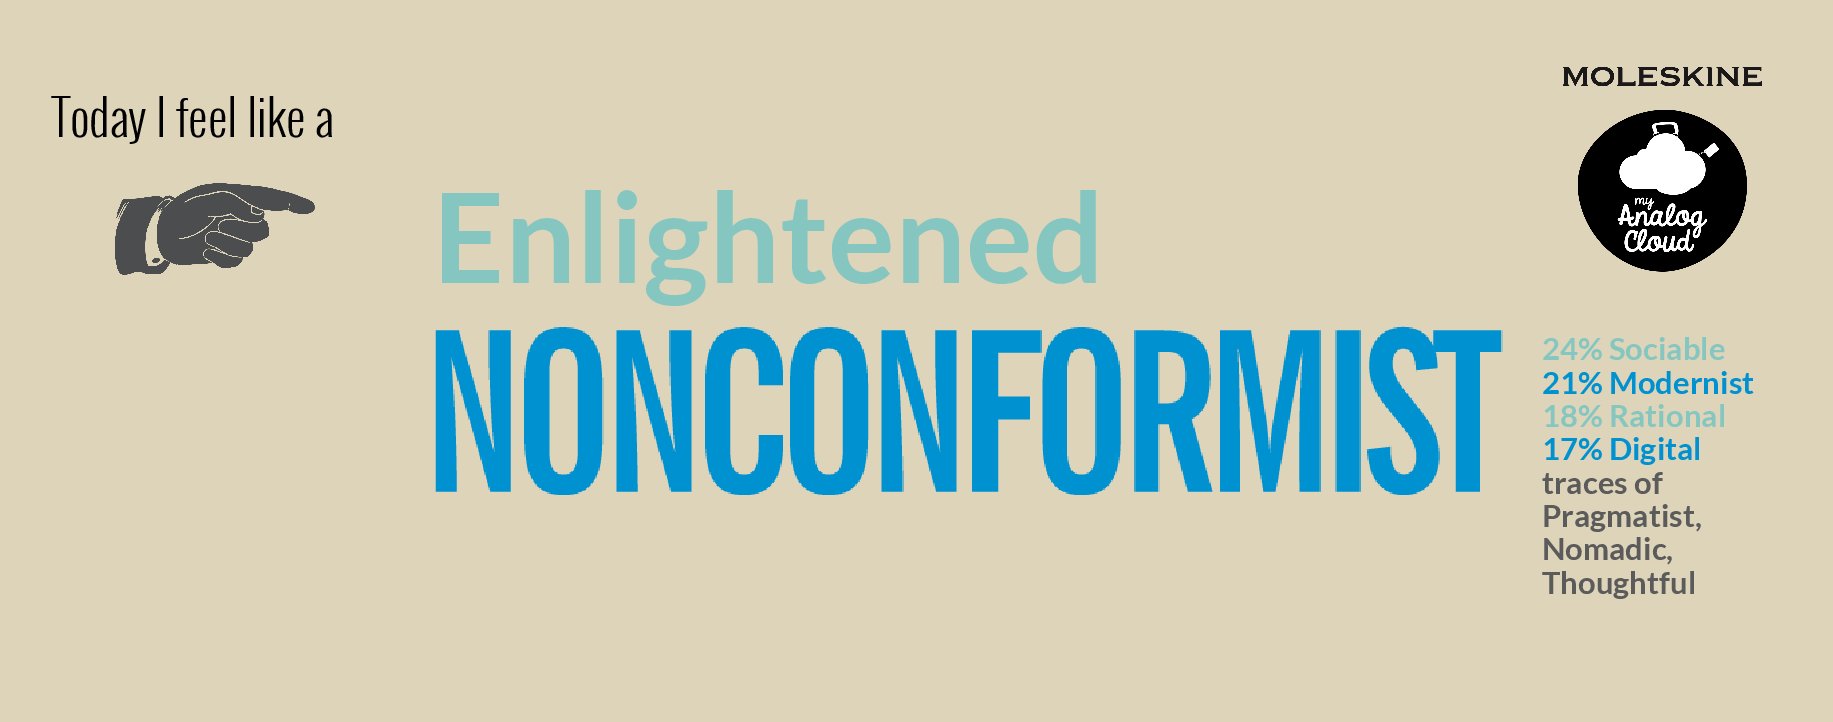 Enlightened Conformist?